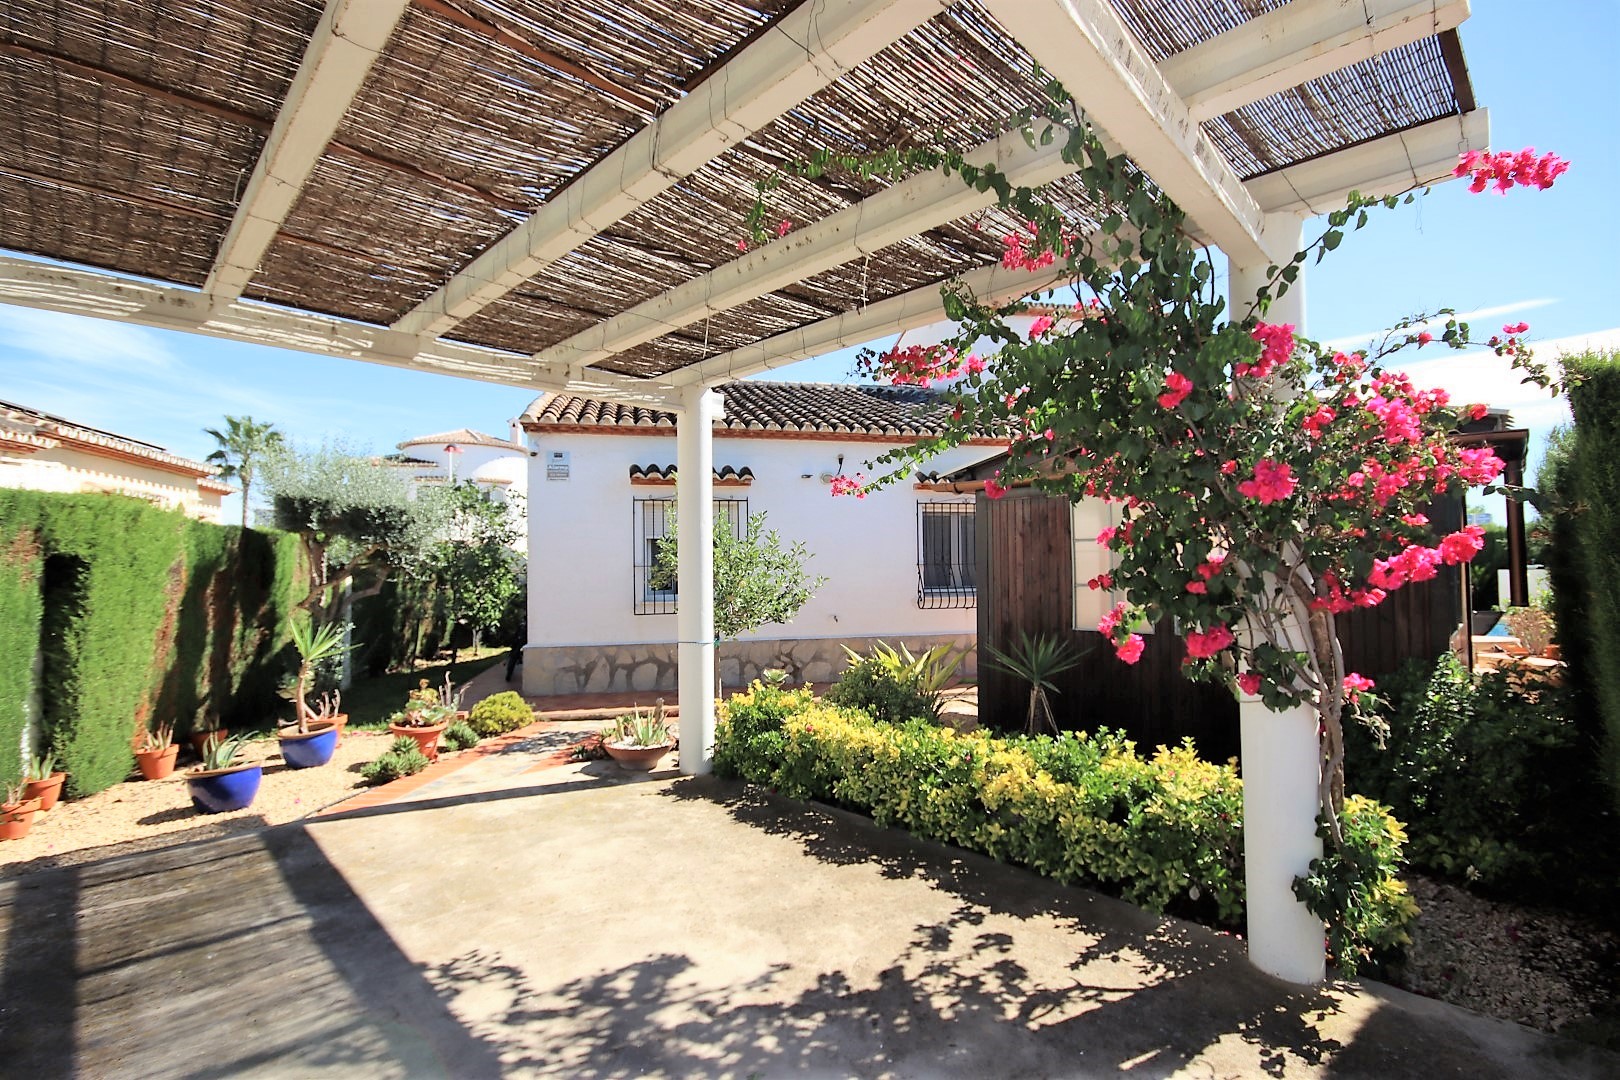 Sunny Villa with pool, 3 bedrooms, Els Poblets, Denia